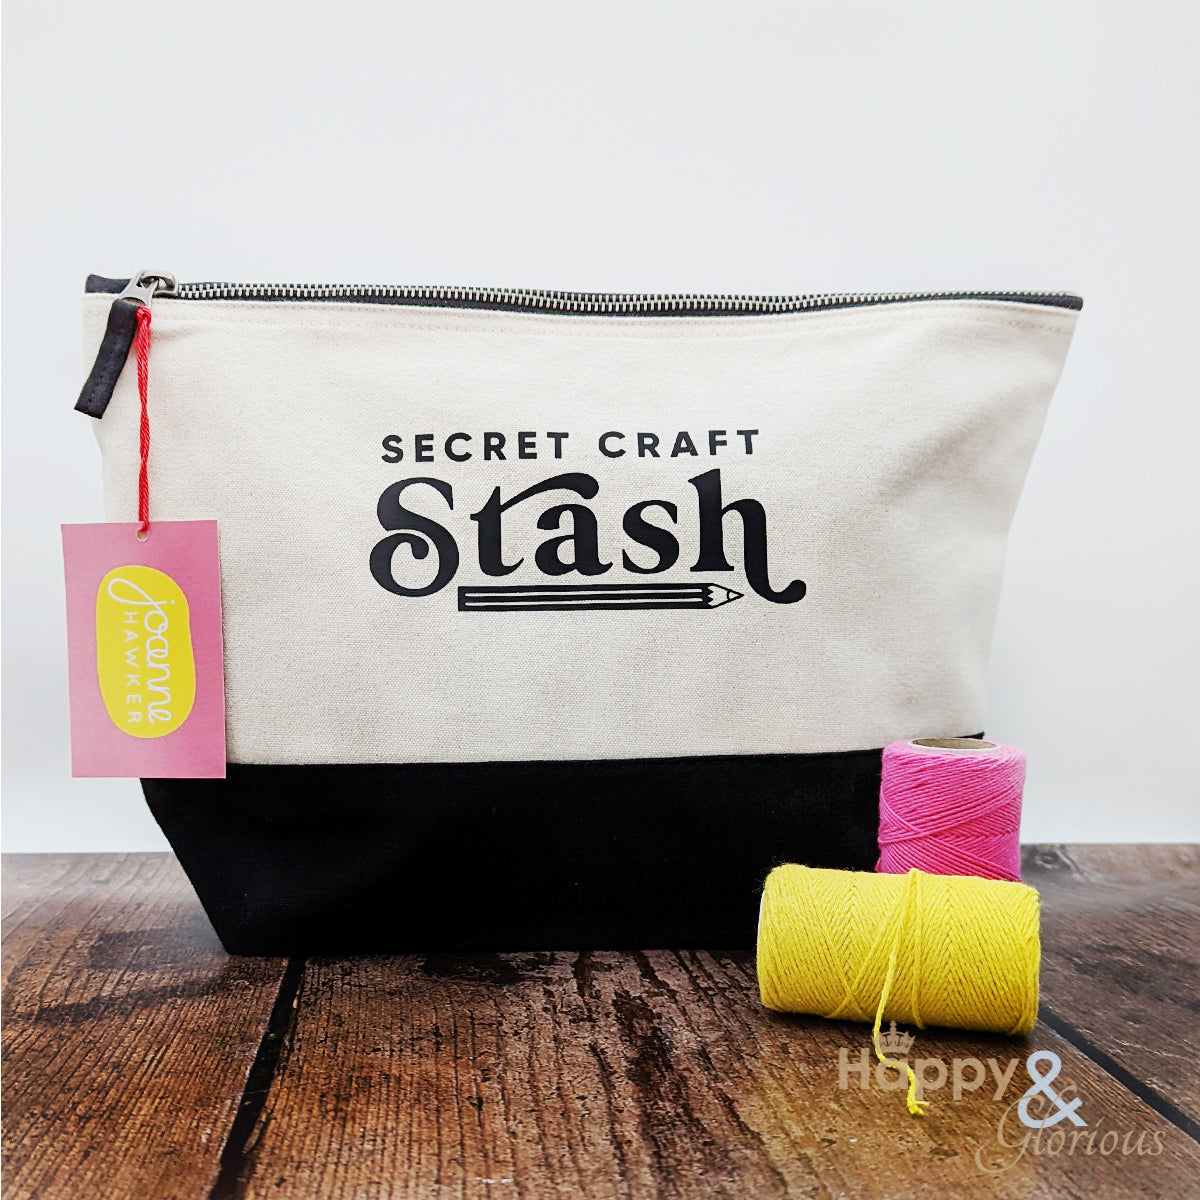 'Secret craft stash' cotton zip purse